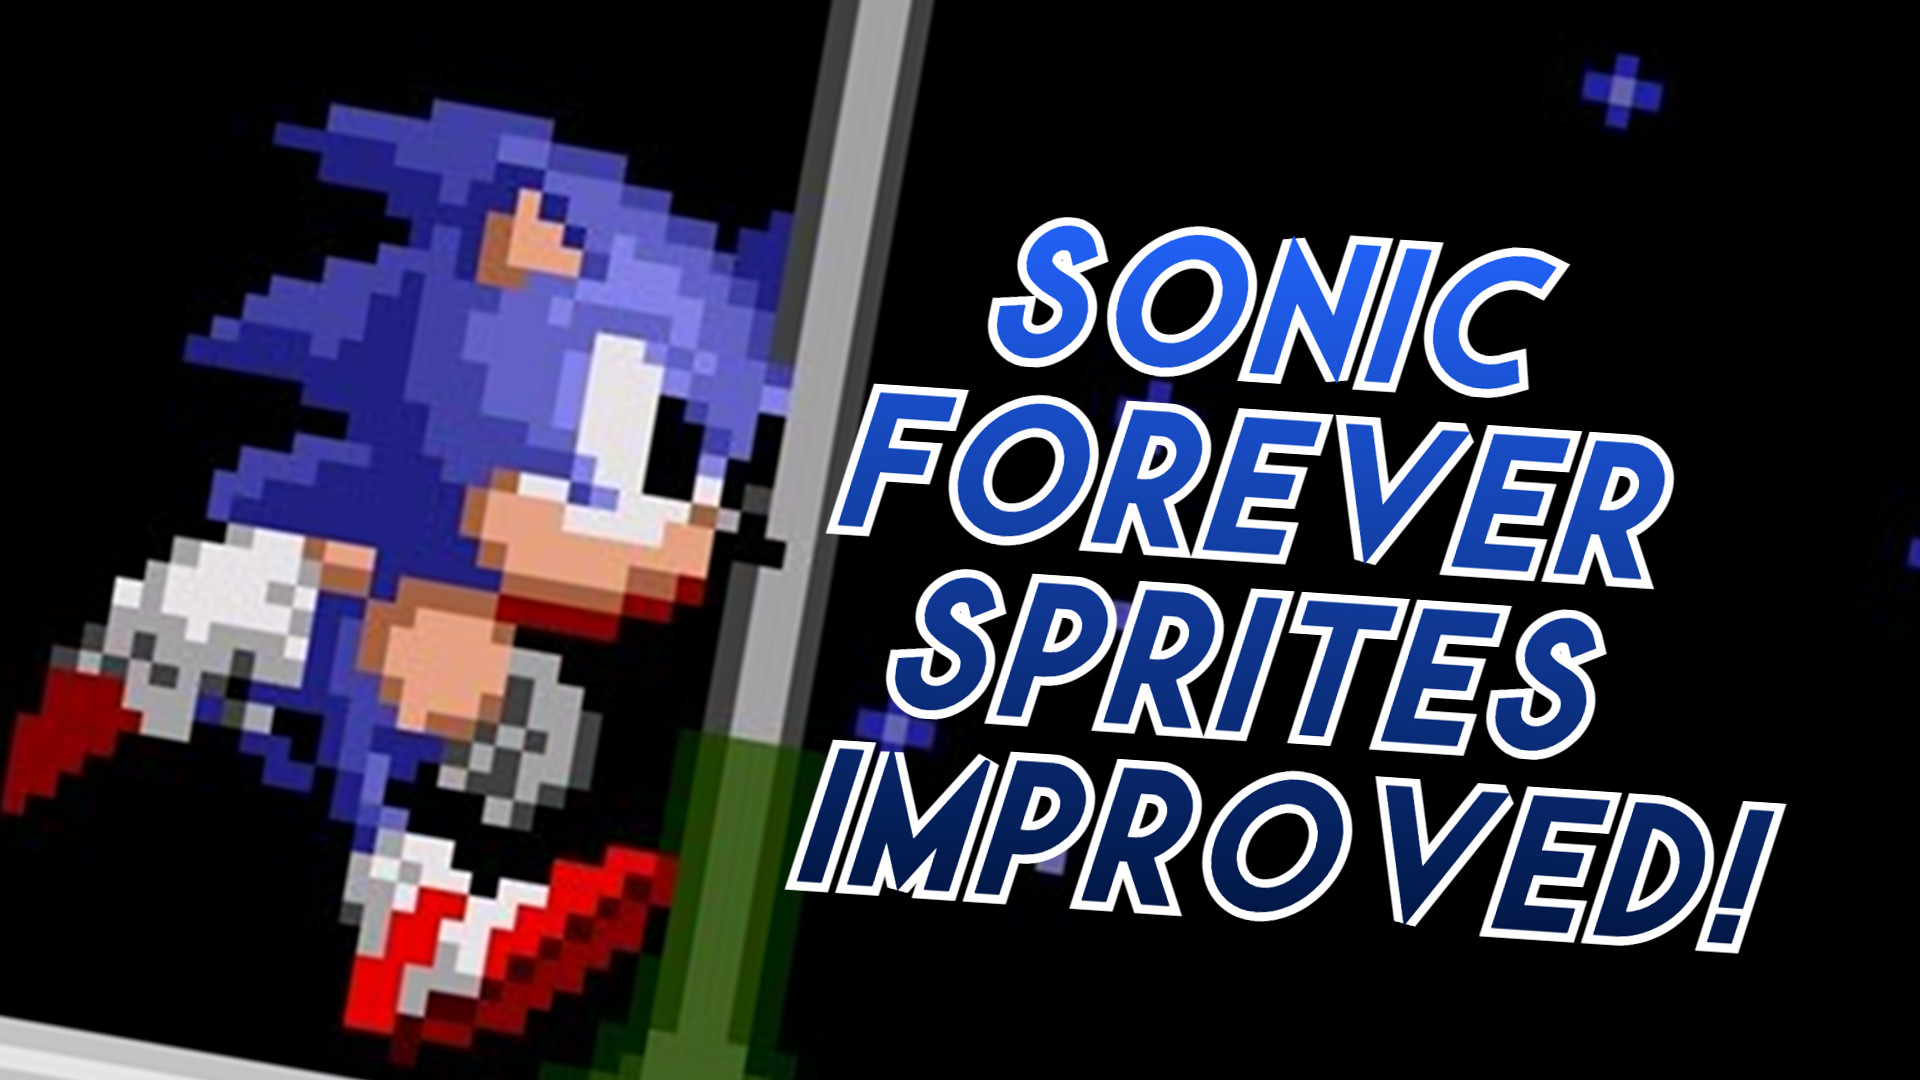 Improved Sonic Sprites! [Sonic the Hedgehog Forever] [Mods]